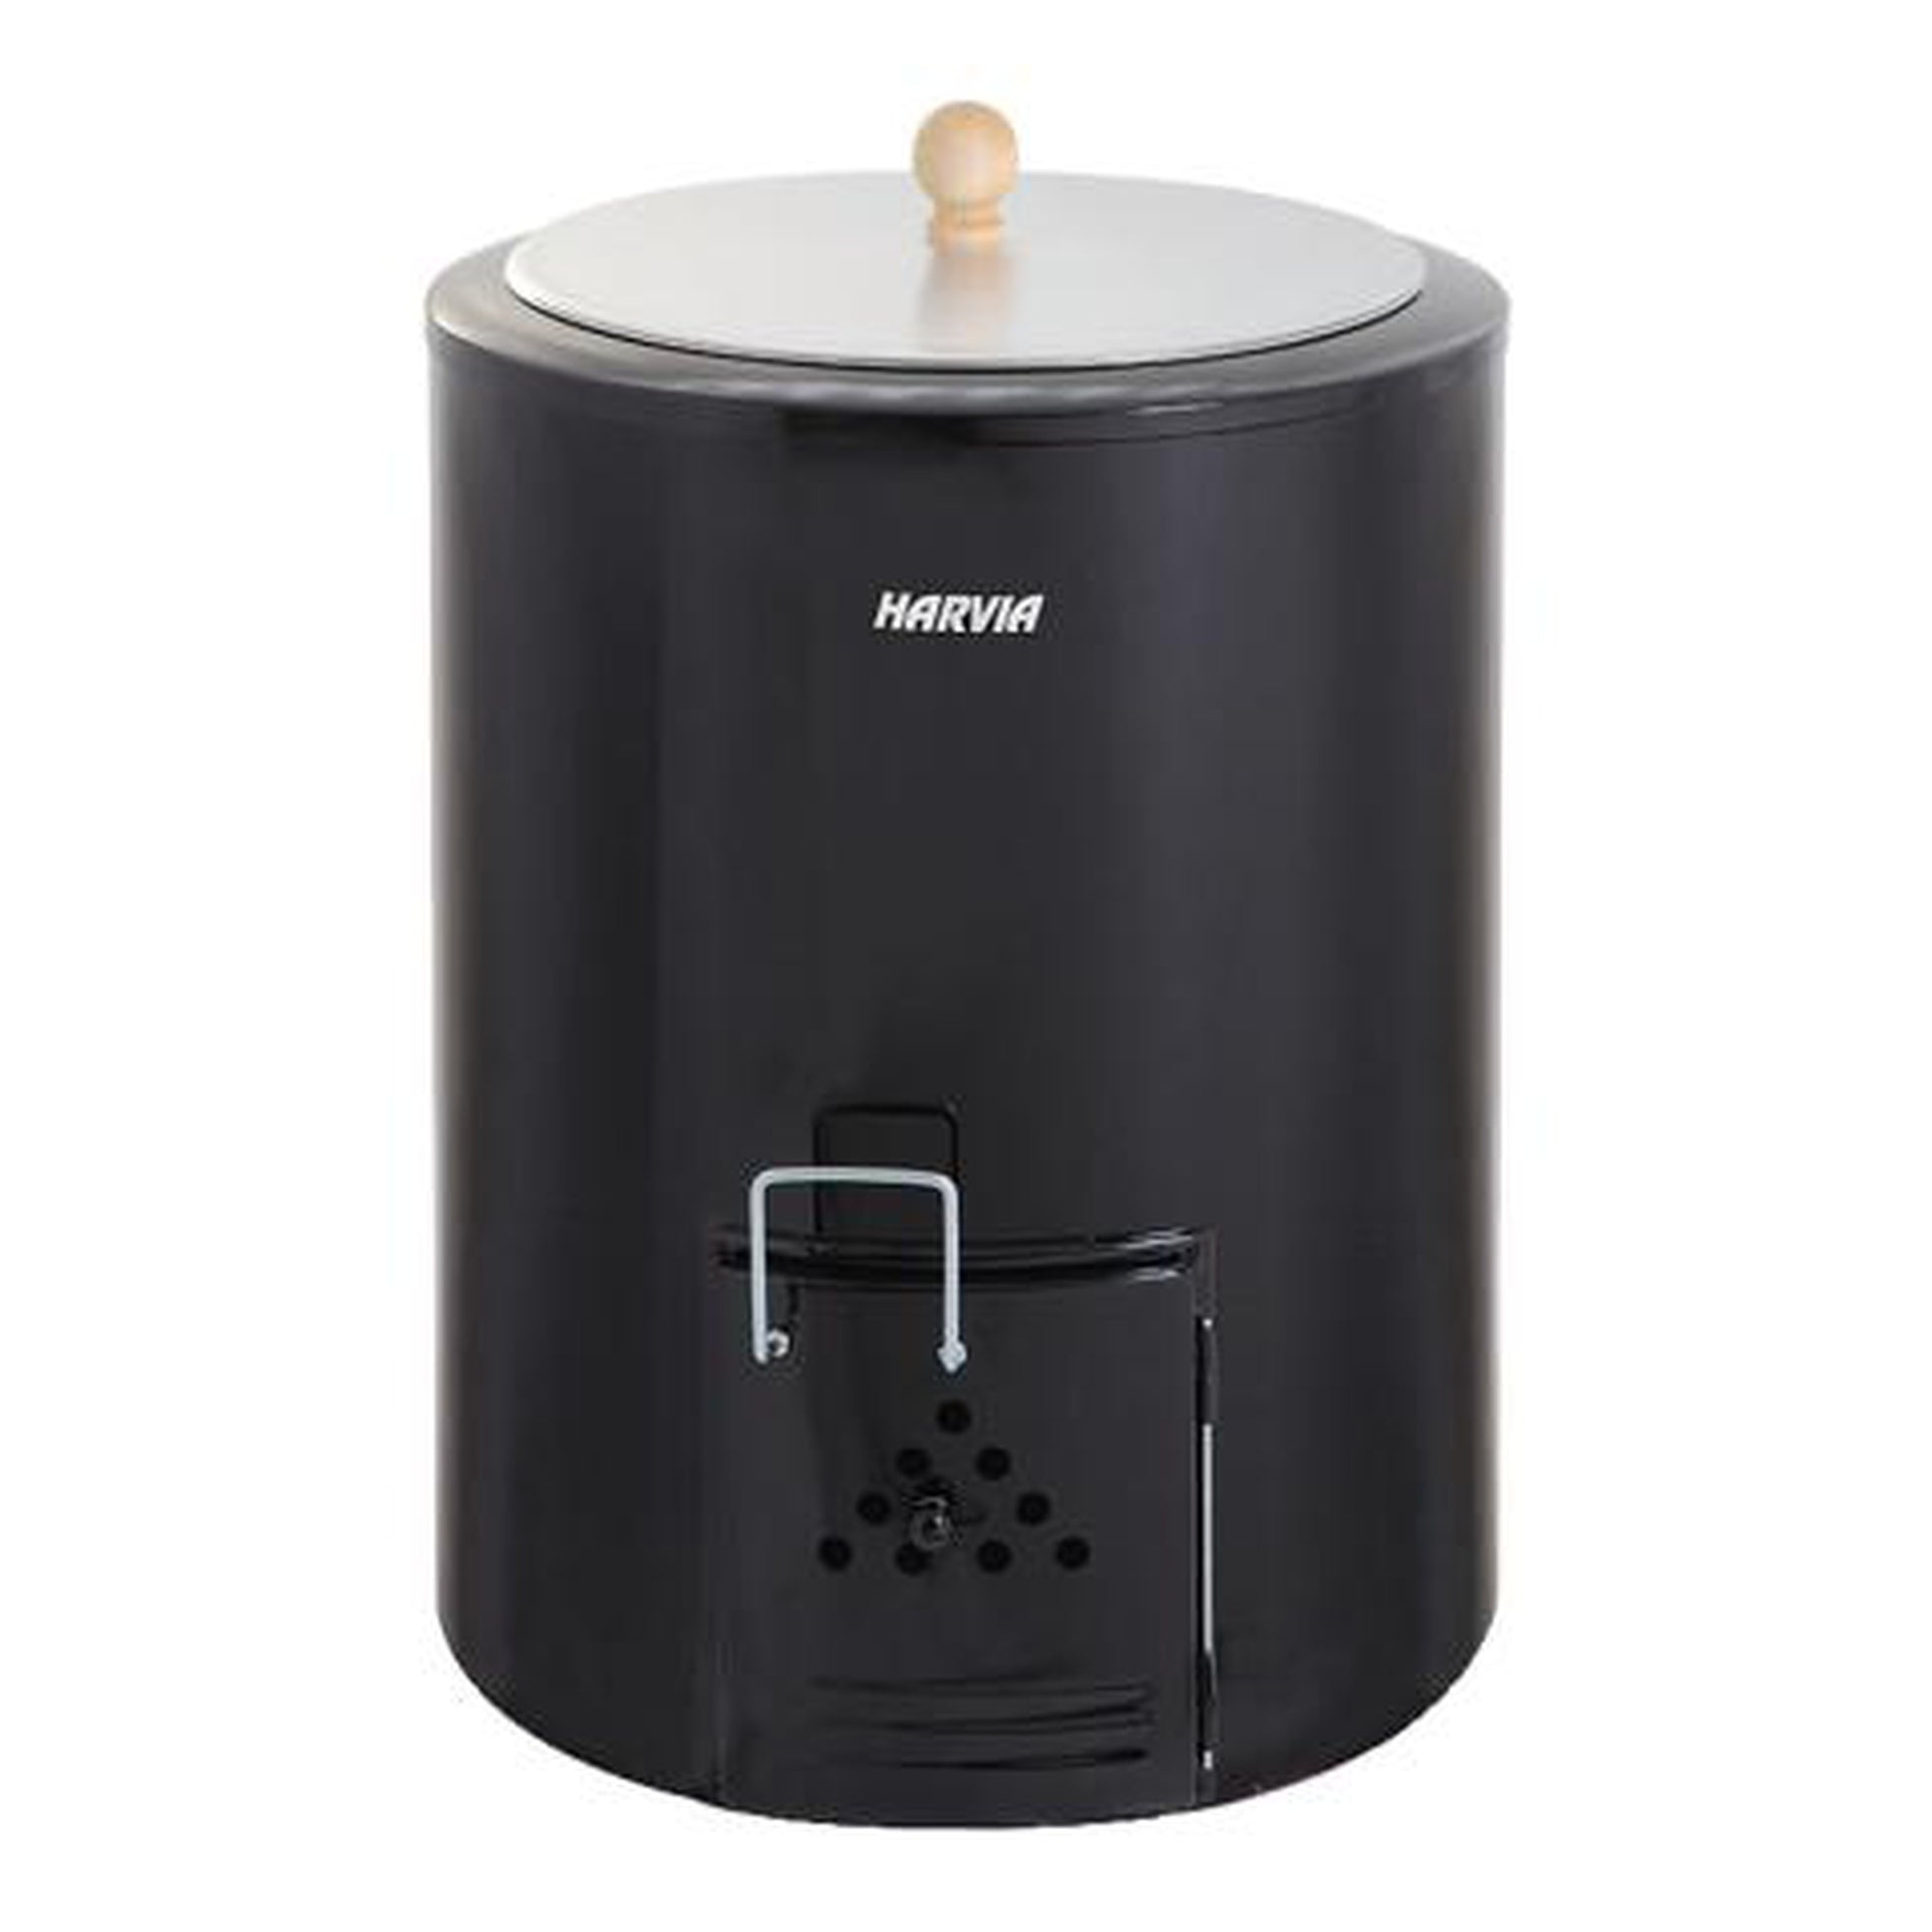 Harvia Cauldron 80-Liter Black Wood Burning Sauna Water Heater